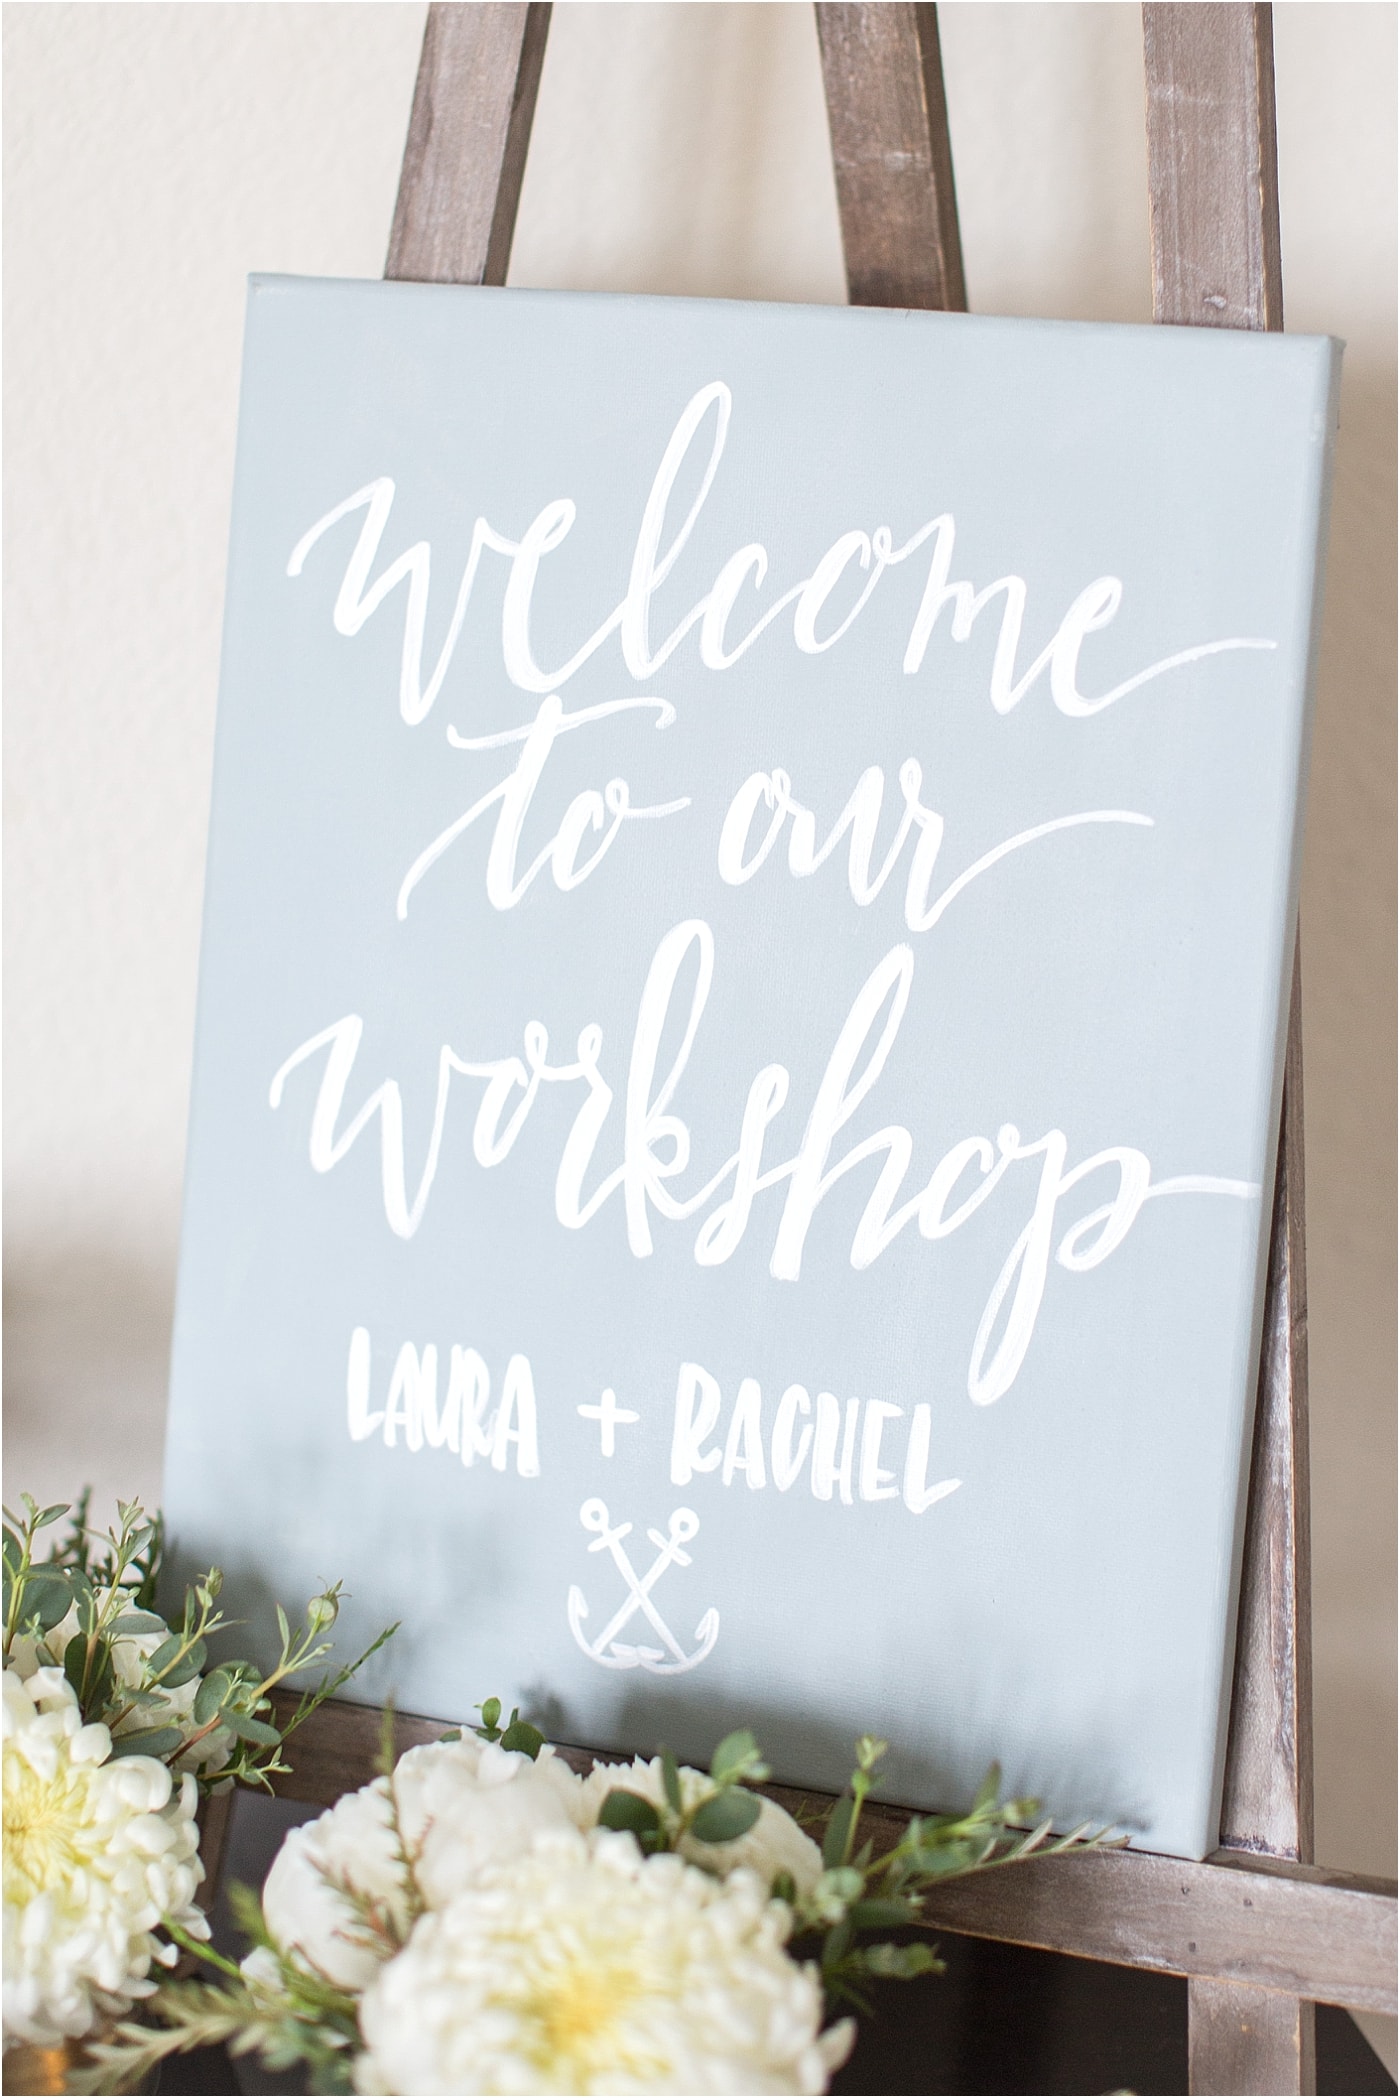 Photography Workshop | Laura & Rachel Workshop